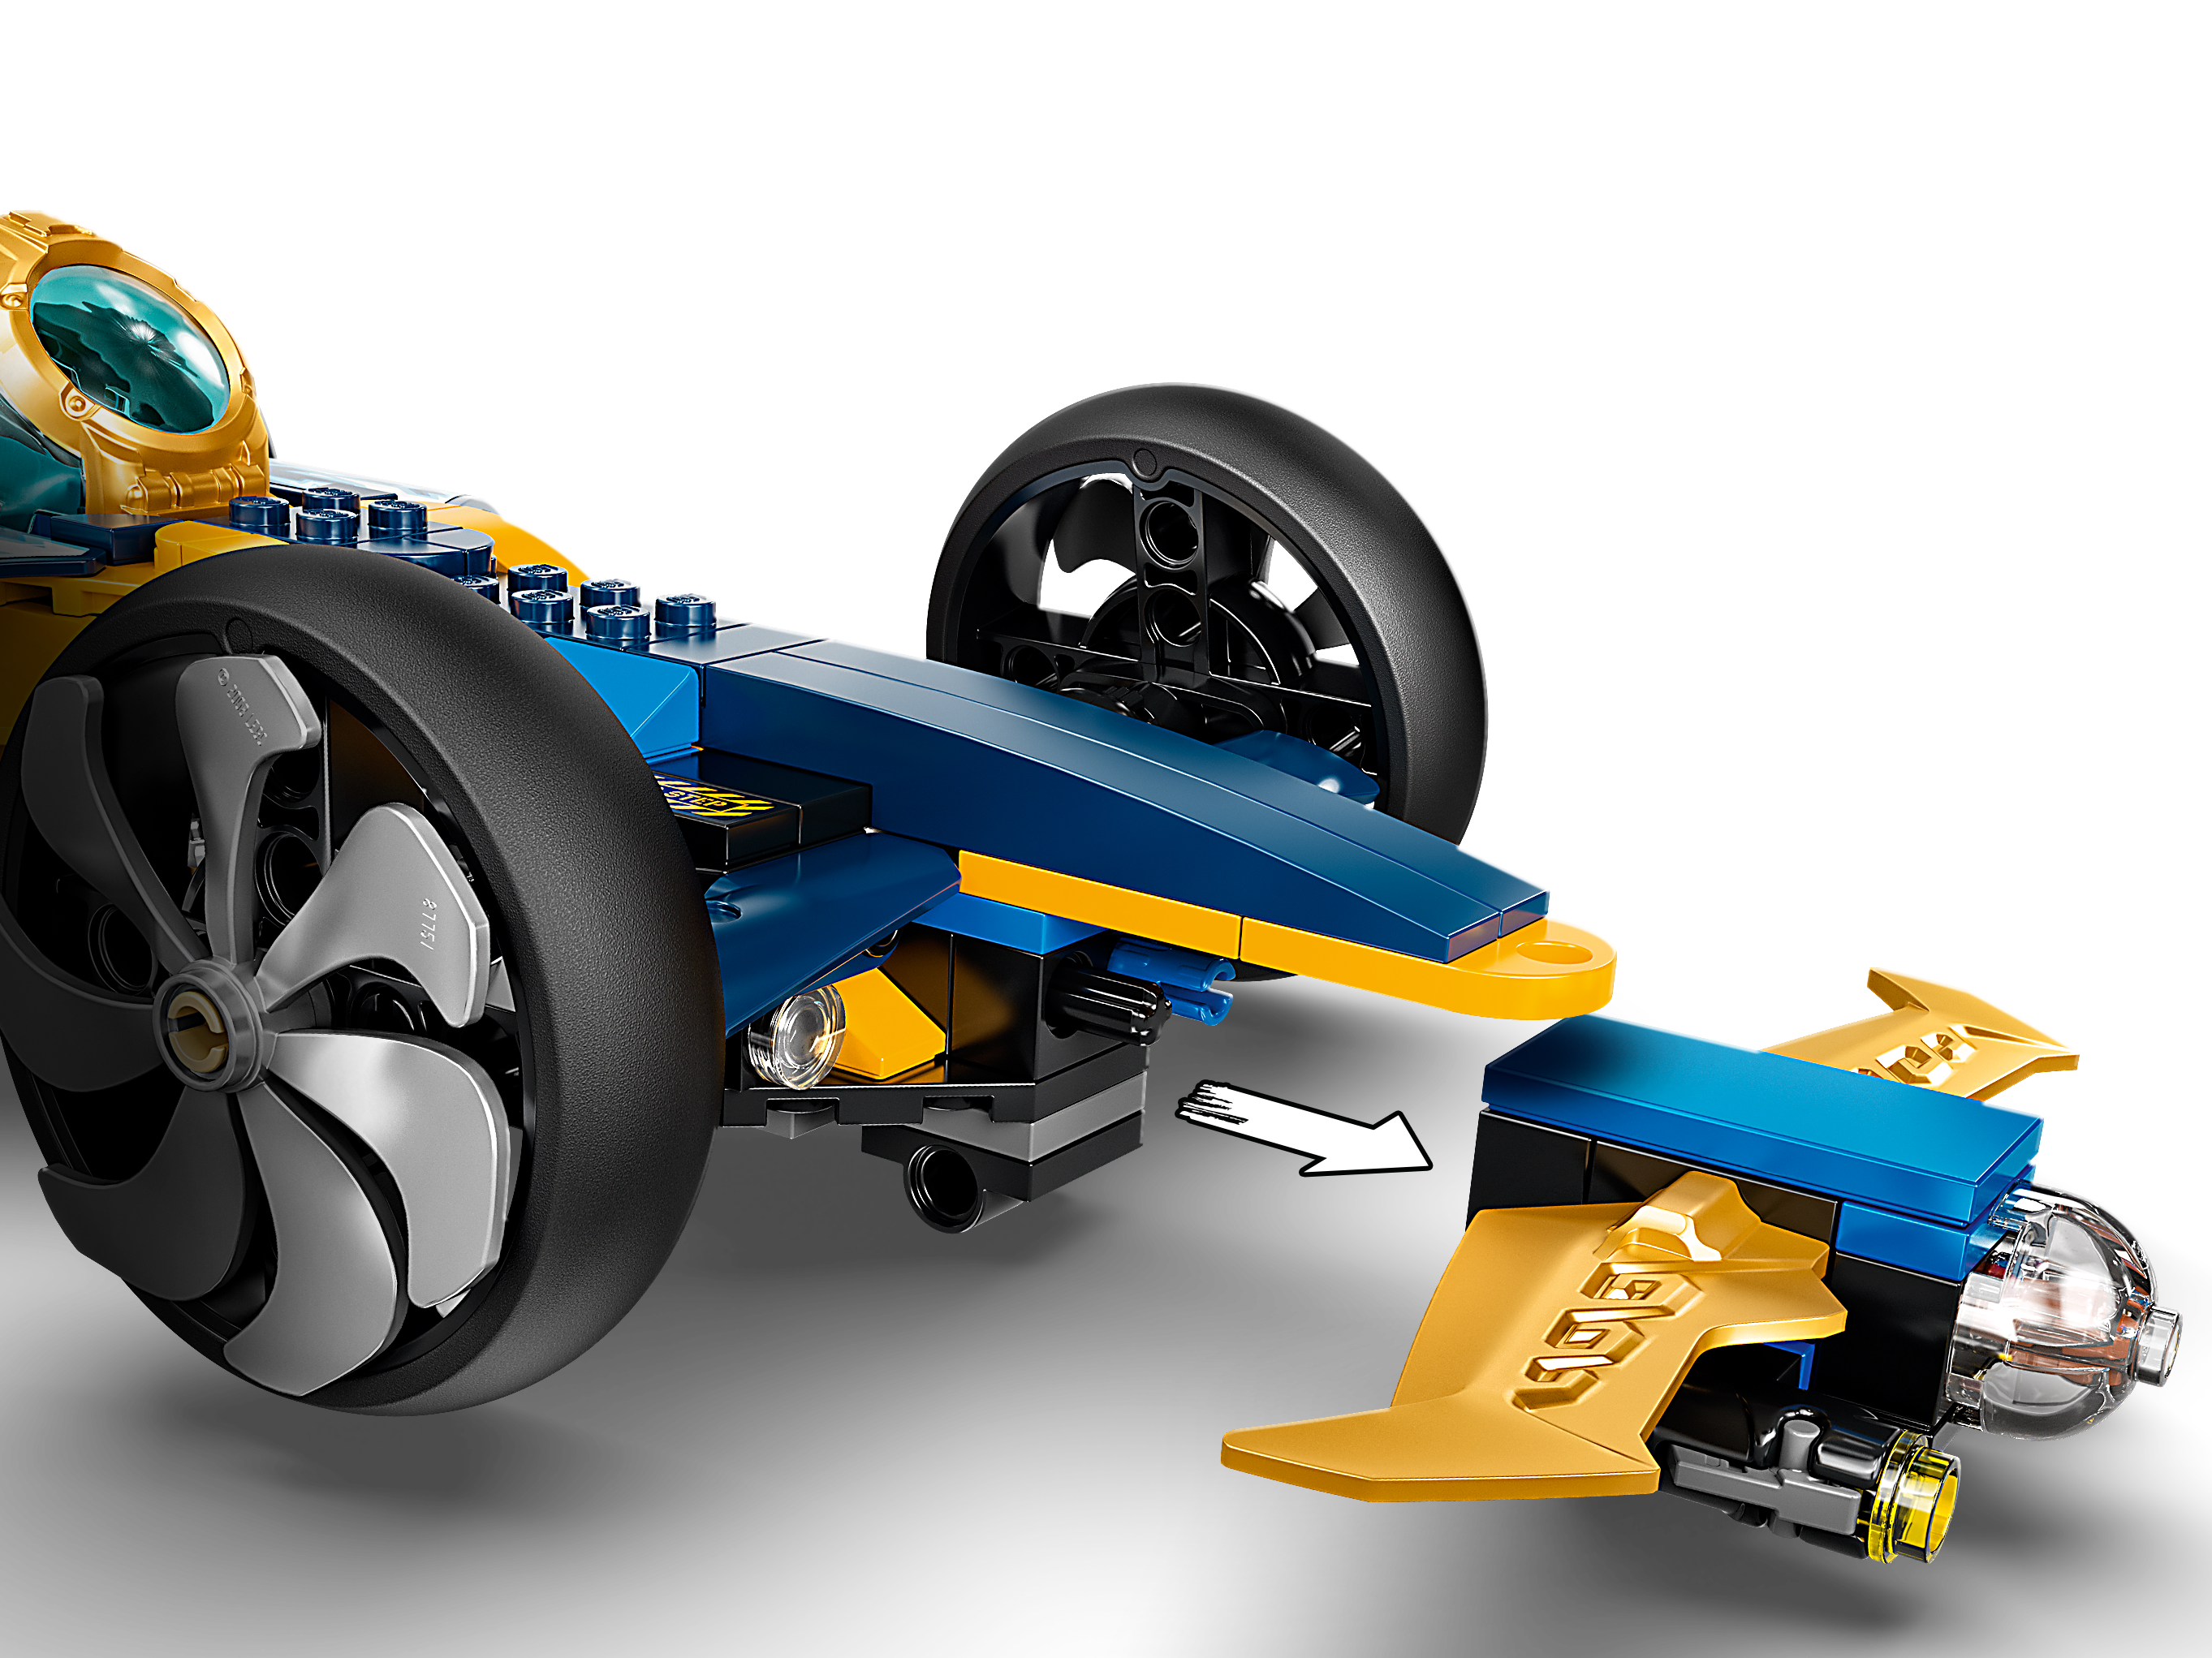 LEGO NINJAGO Ninja Sub Speeder 71752 Building Toy Includes NINJAGO Cole and  Jay Minifigures (356 Pieces)